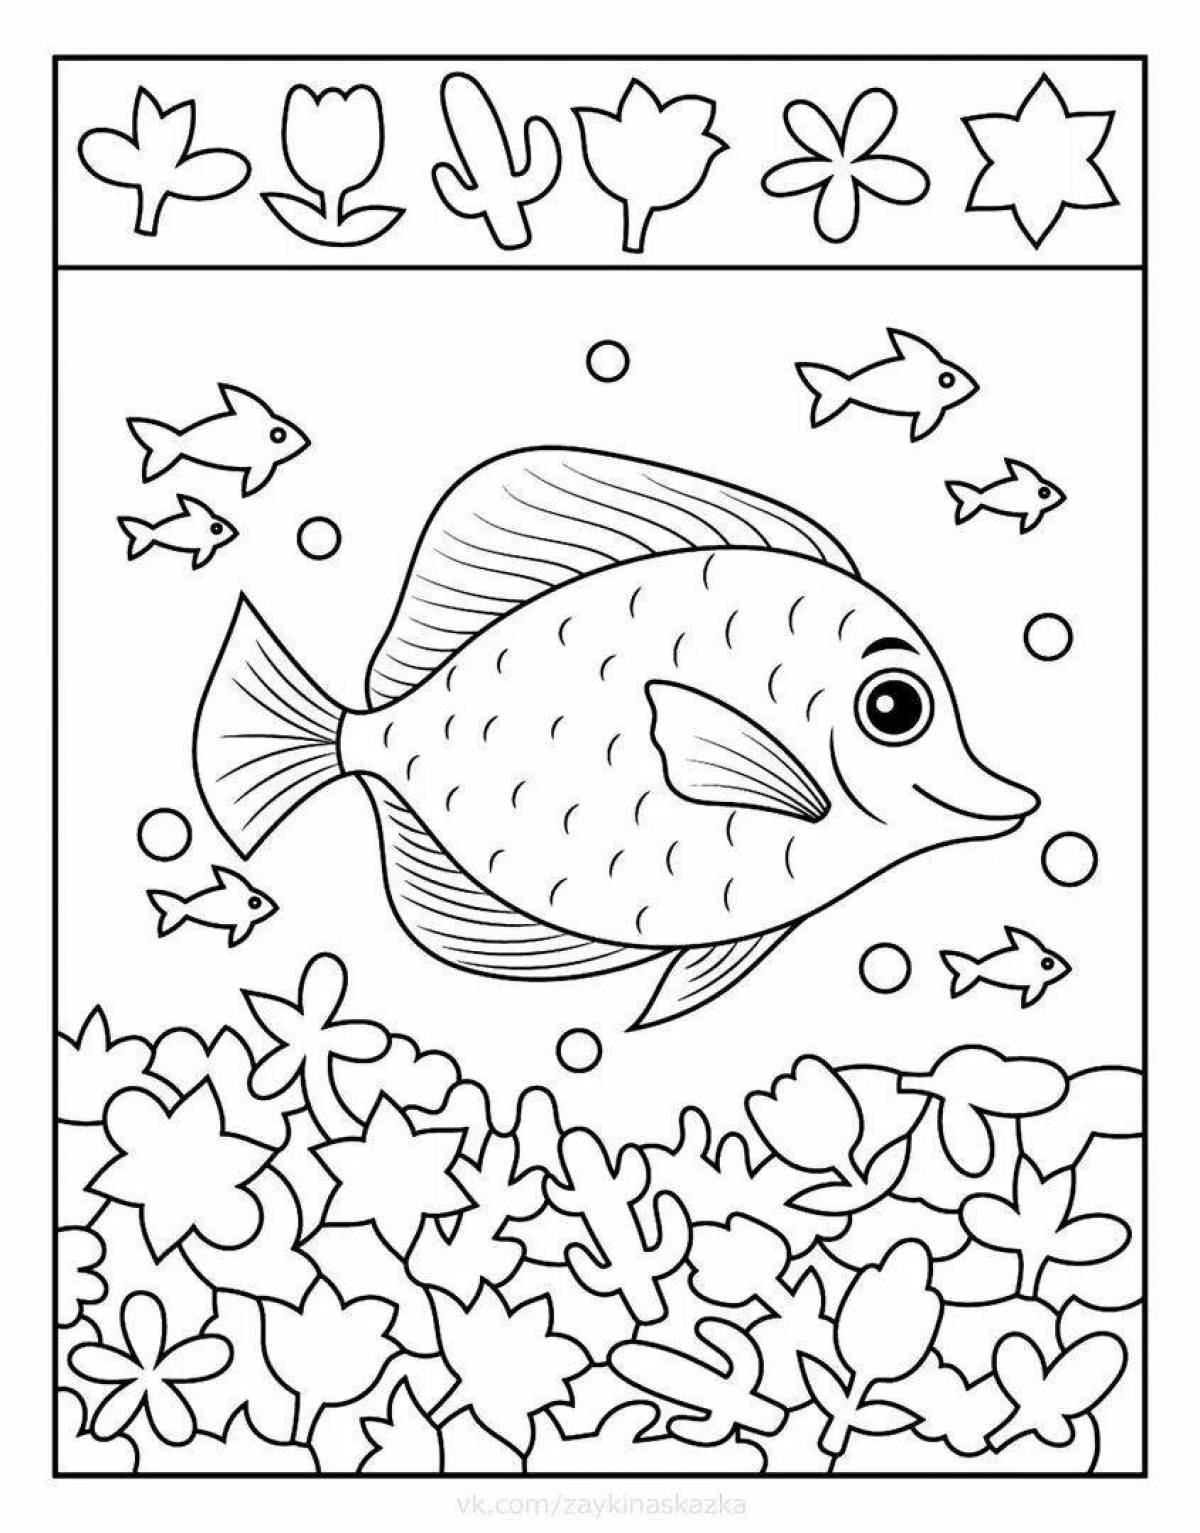 Fabulous aquarium fish coloring book